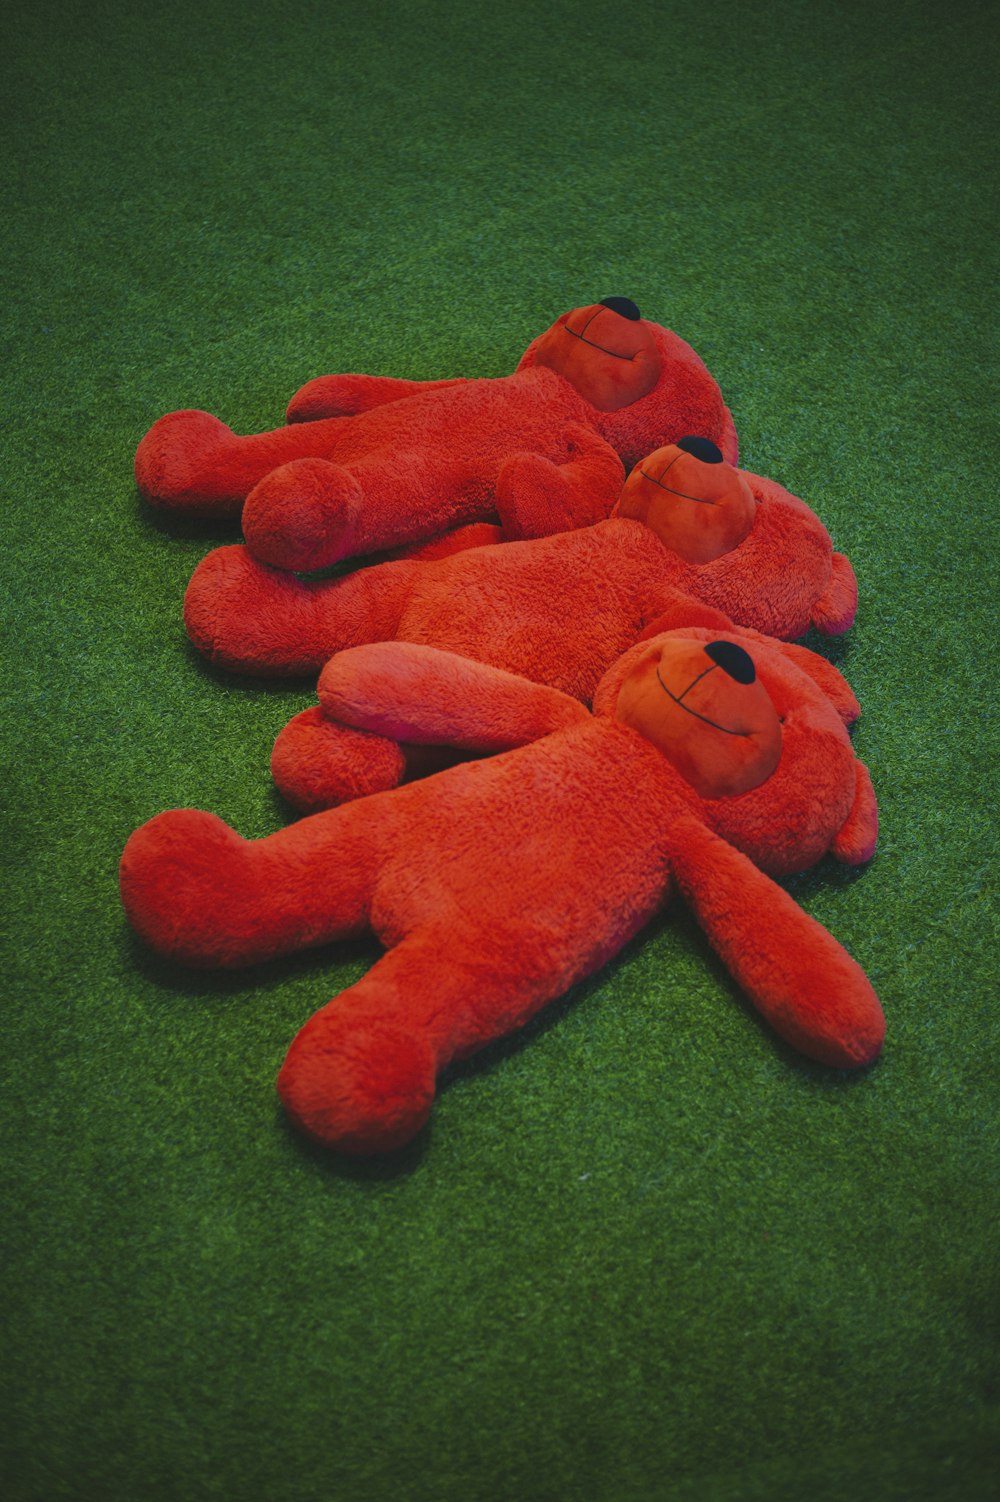 a group of orange stuffed animals